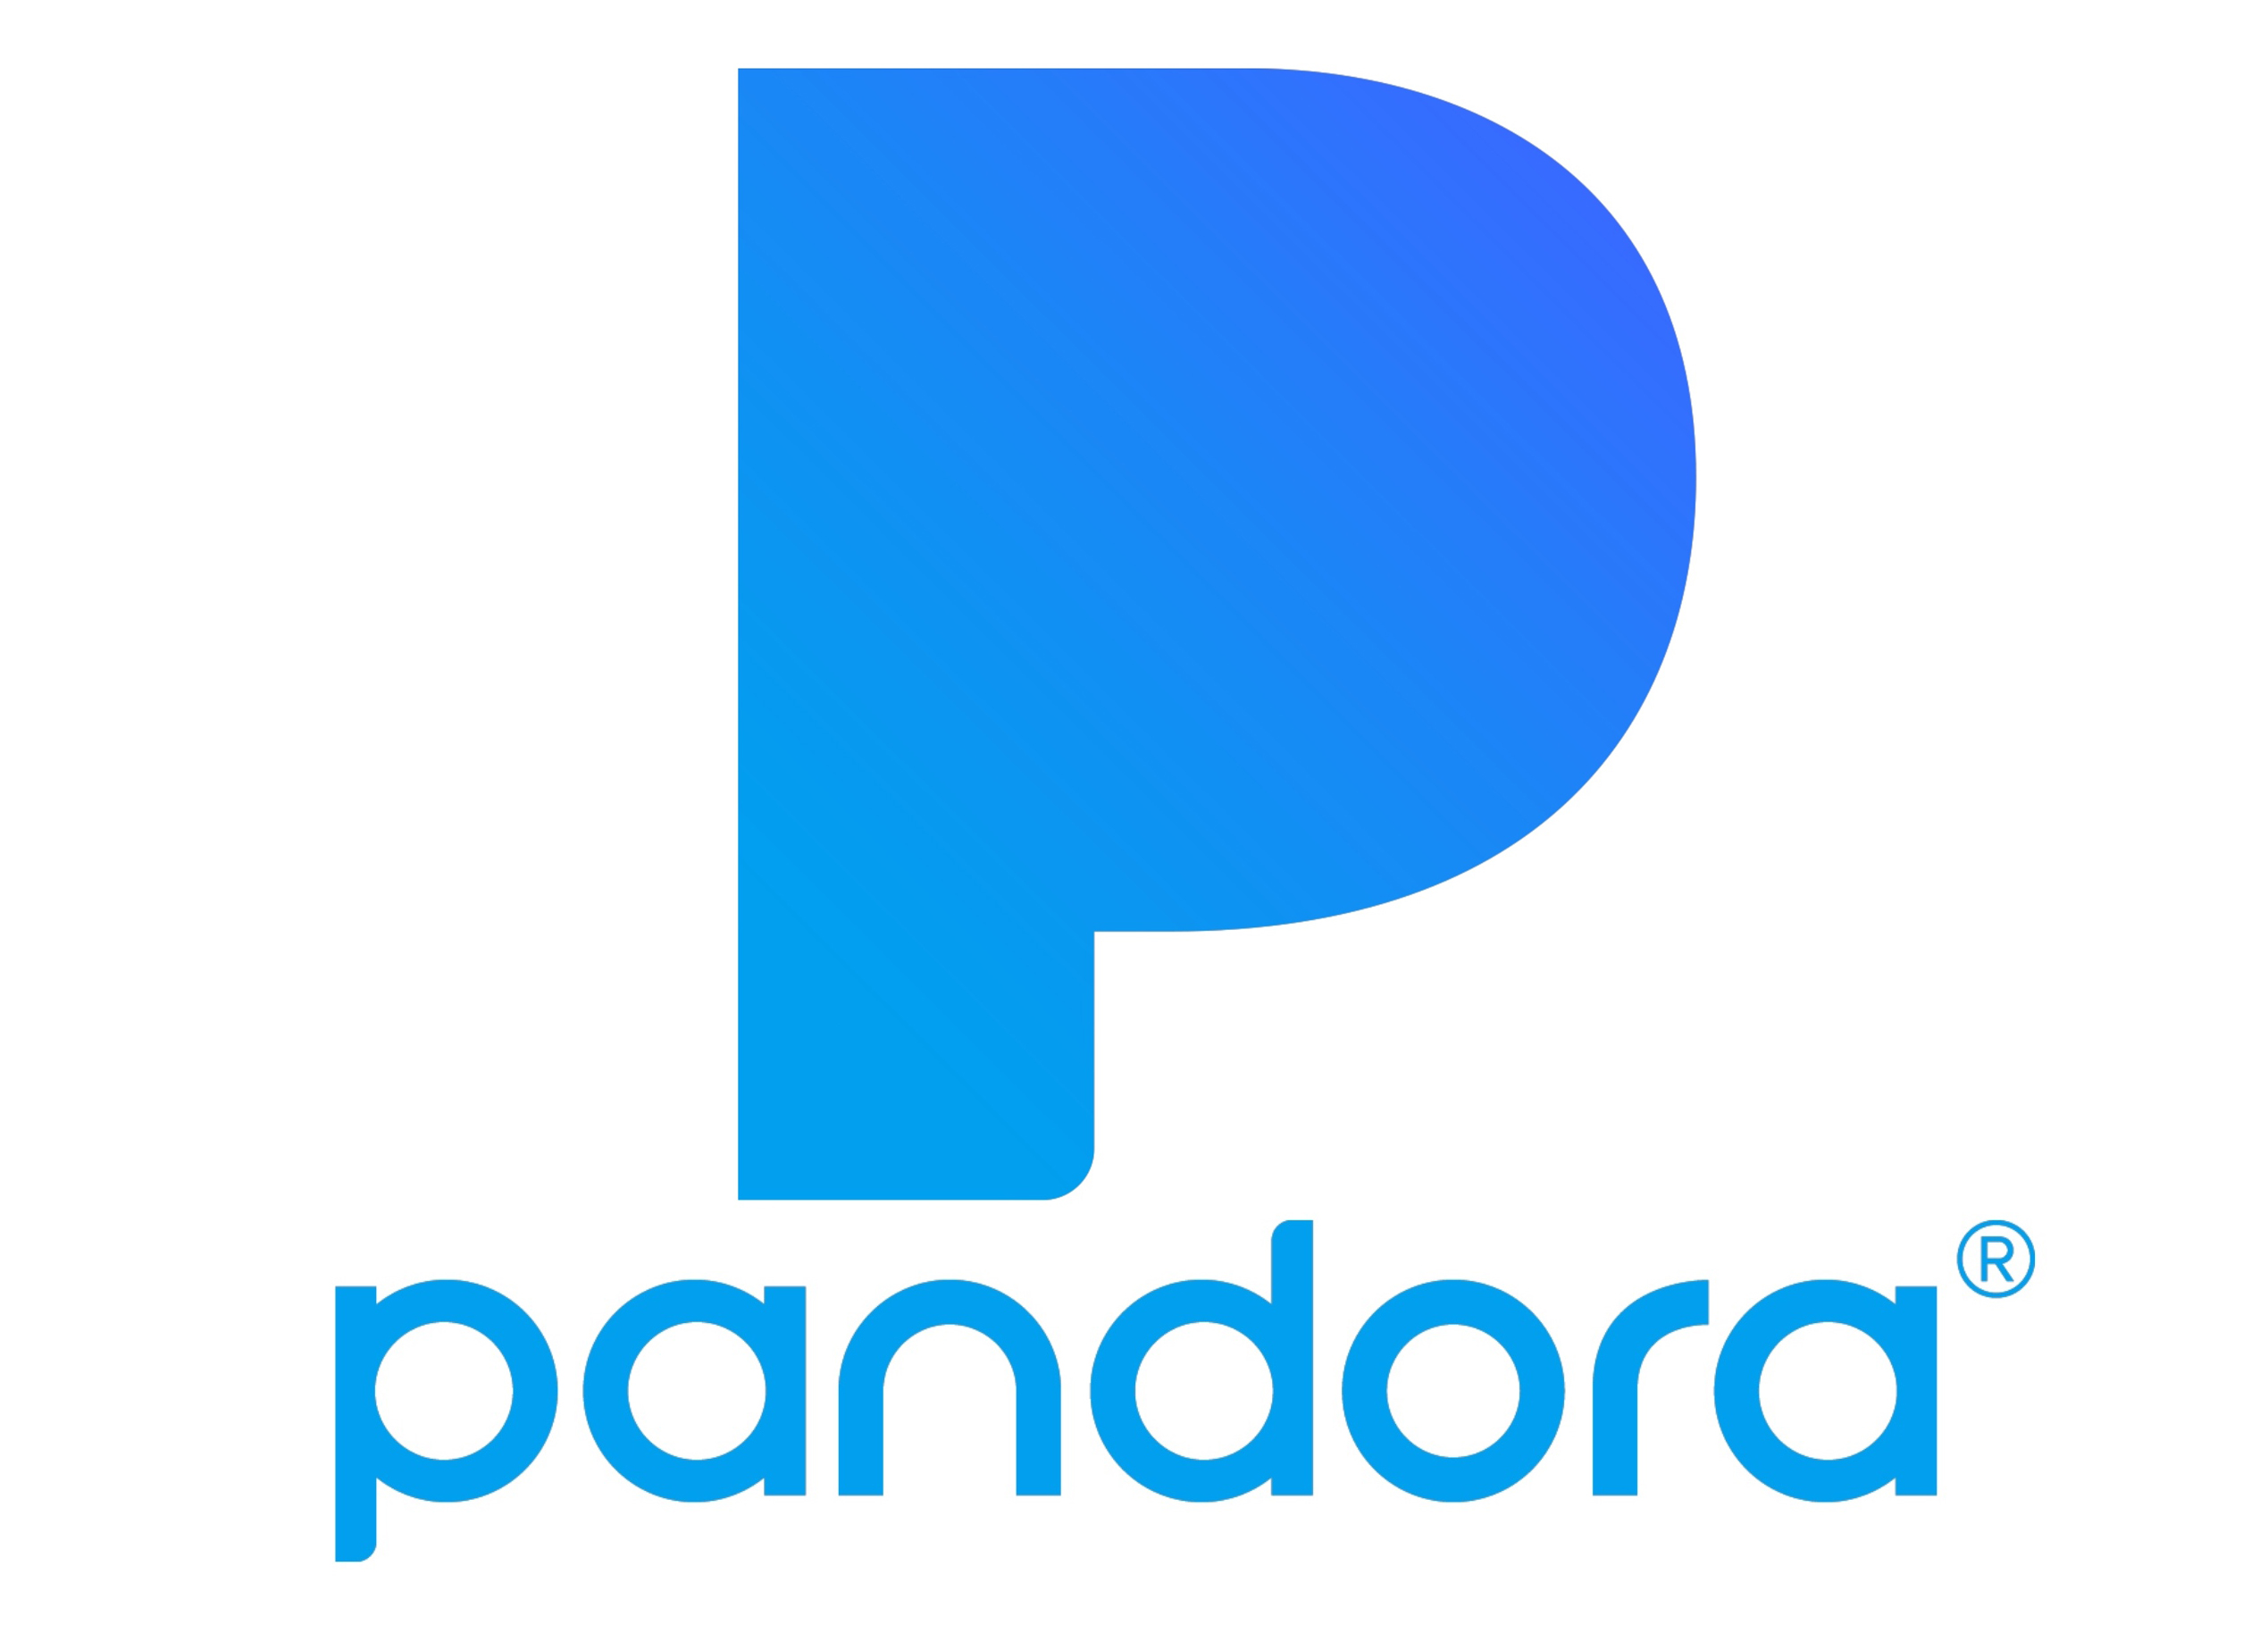 Pandora Logo, symbol, meaning, History and Evolution